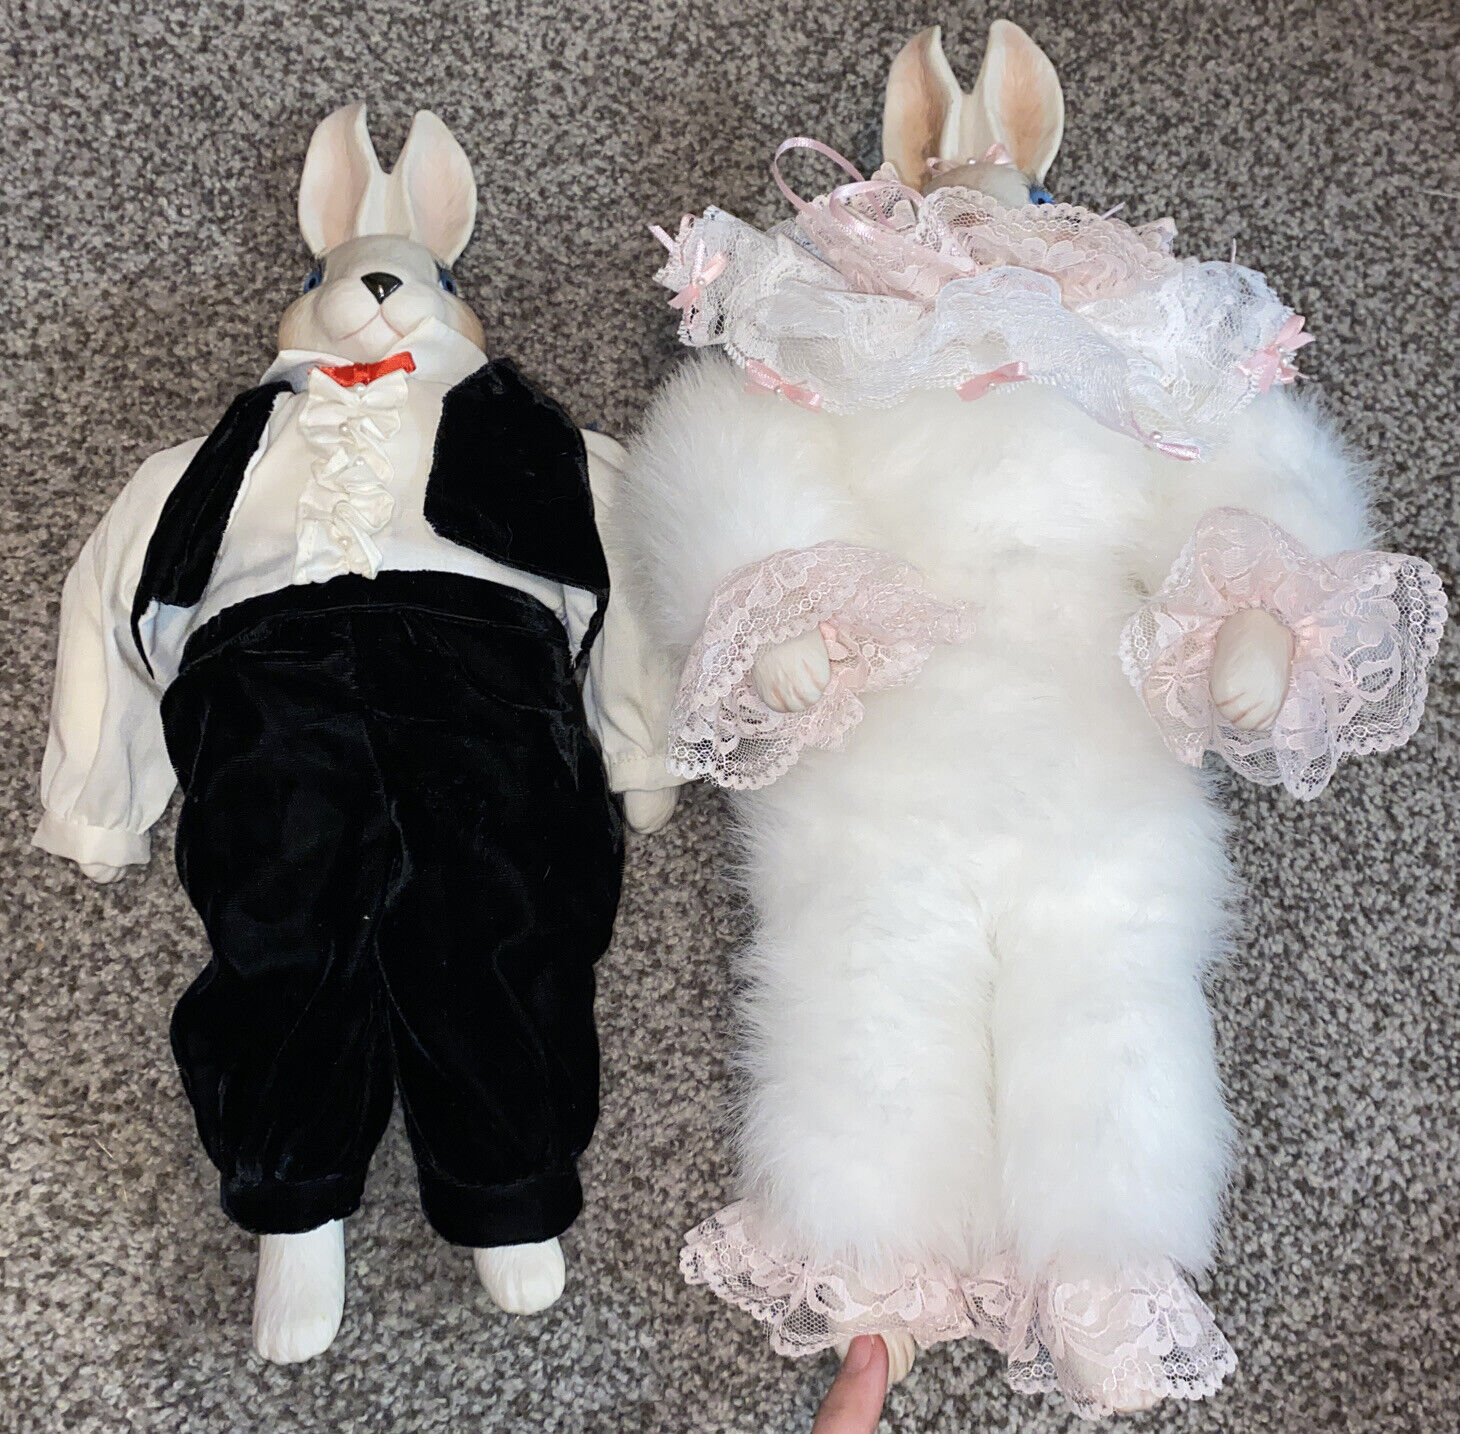 Easter Decor Porcelain & Plush Easter Bunnies Male Suit Female Lace Pair Or Solo